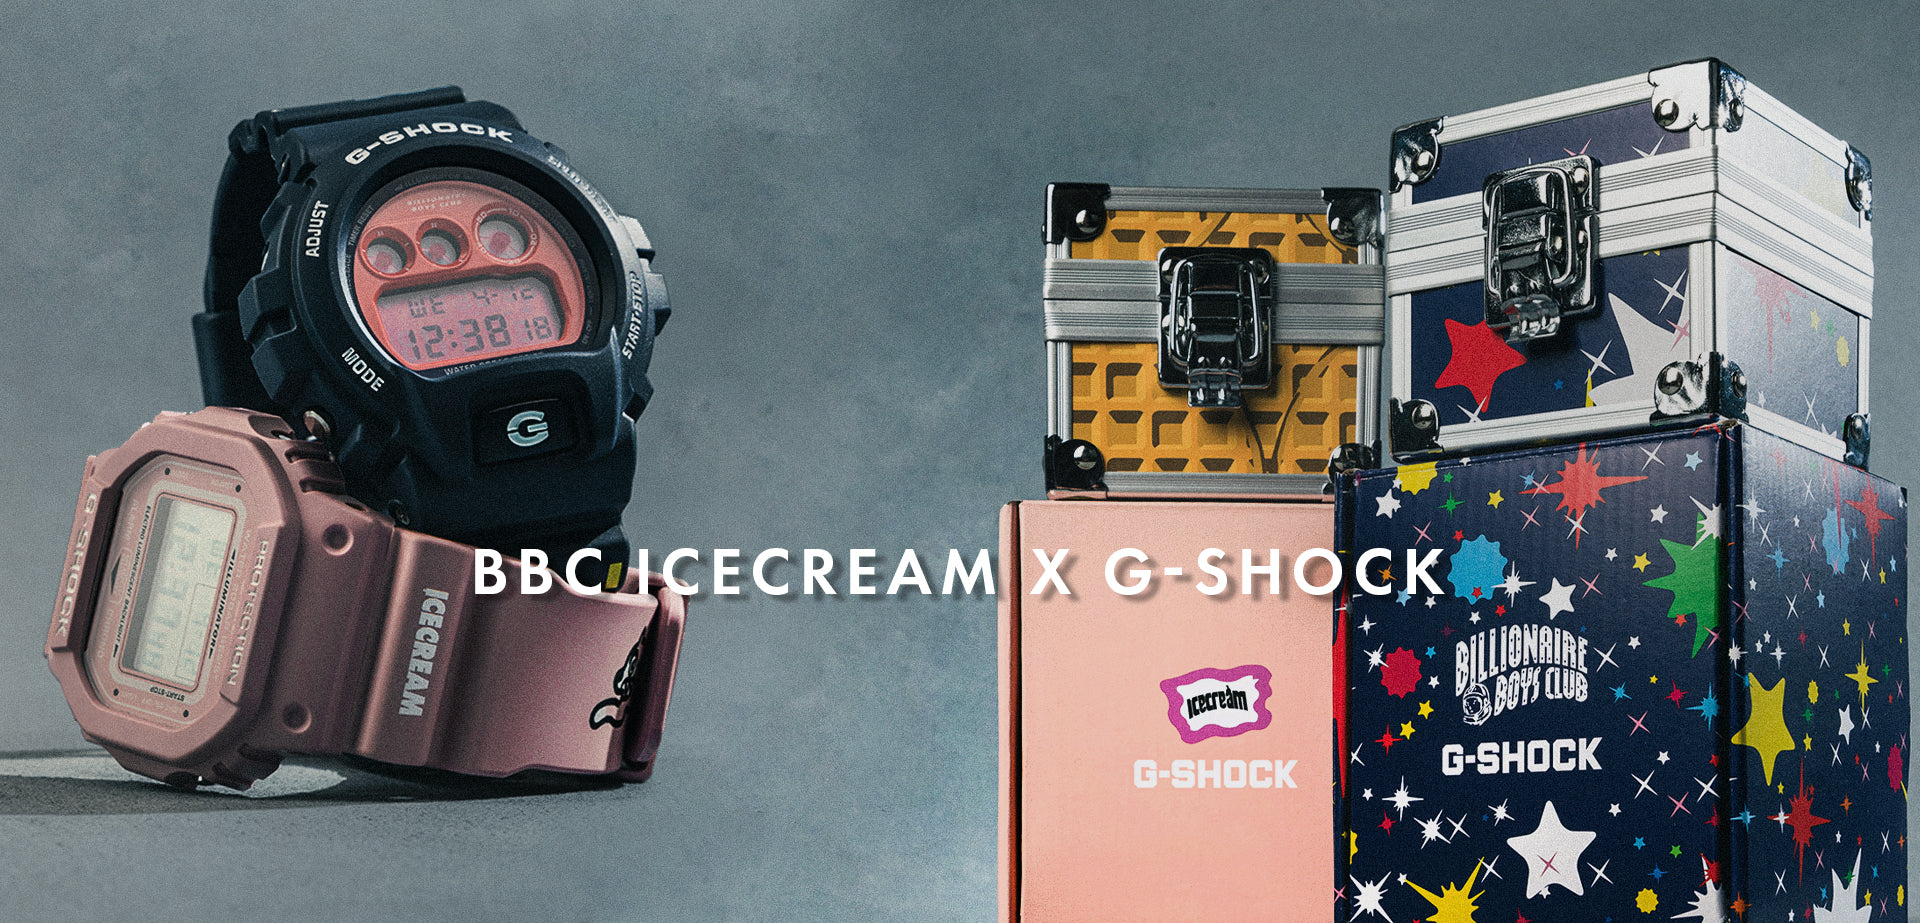 BBC ICECREAM X G-SHOCK